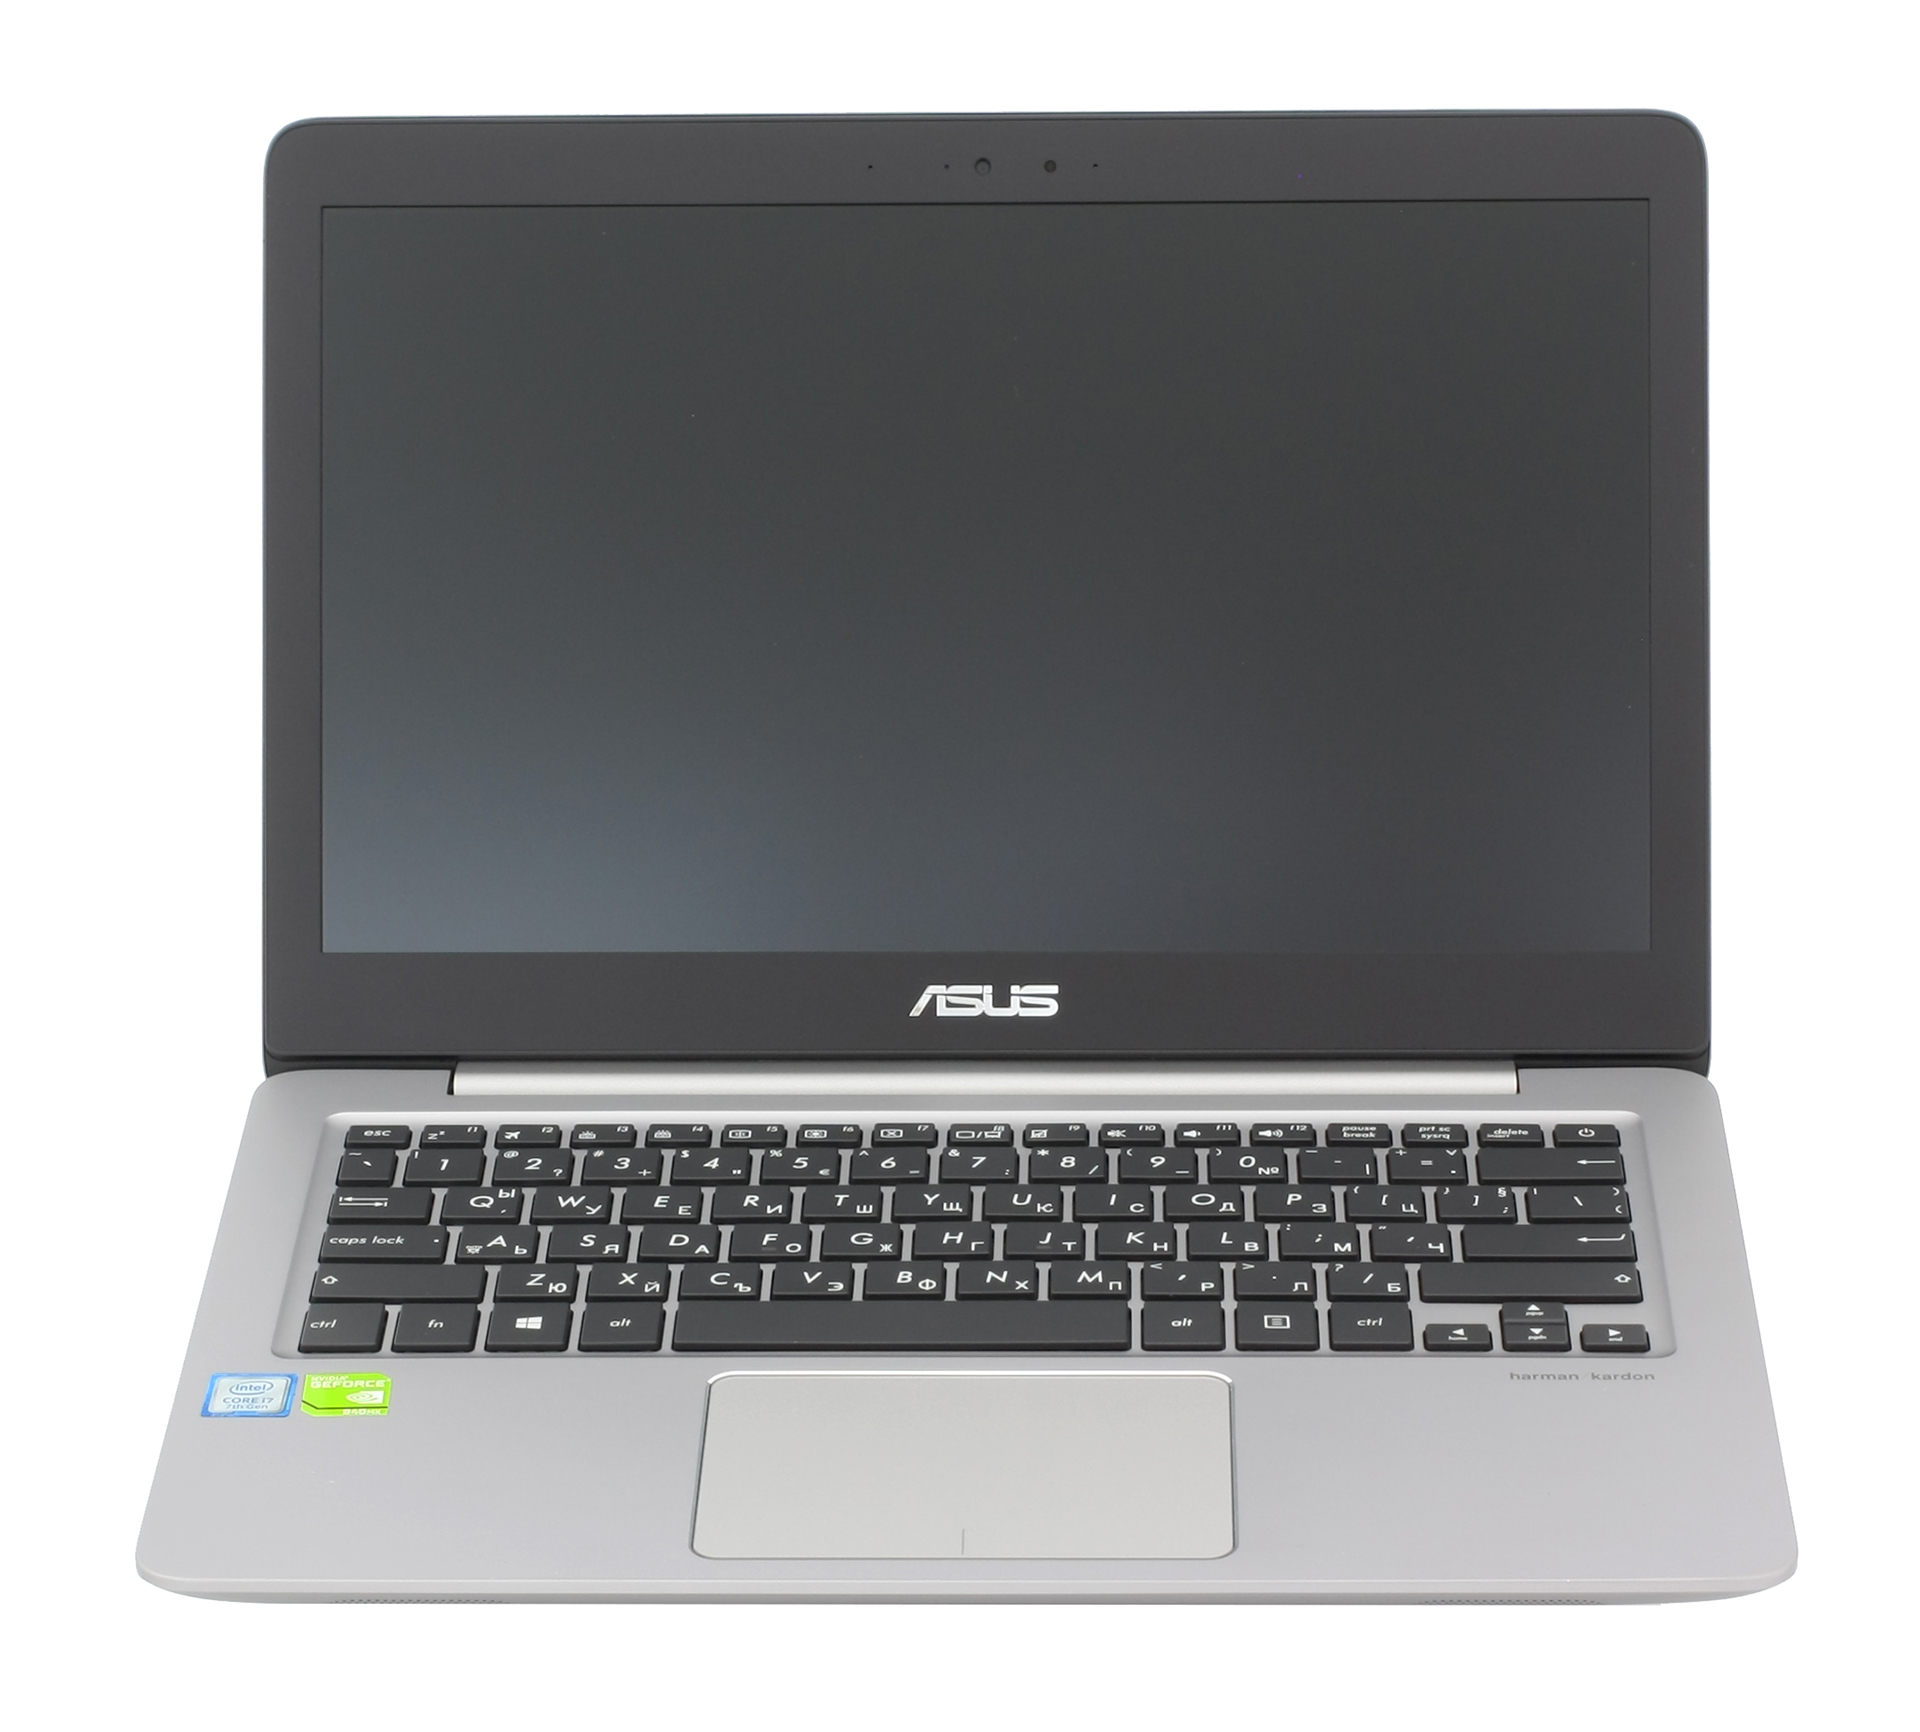 ASUS ZenBook UX310UQ review - thin, light, powerful | LaptopMedia.com